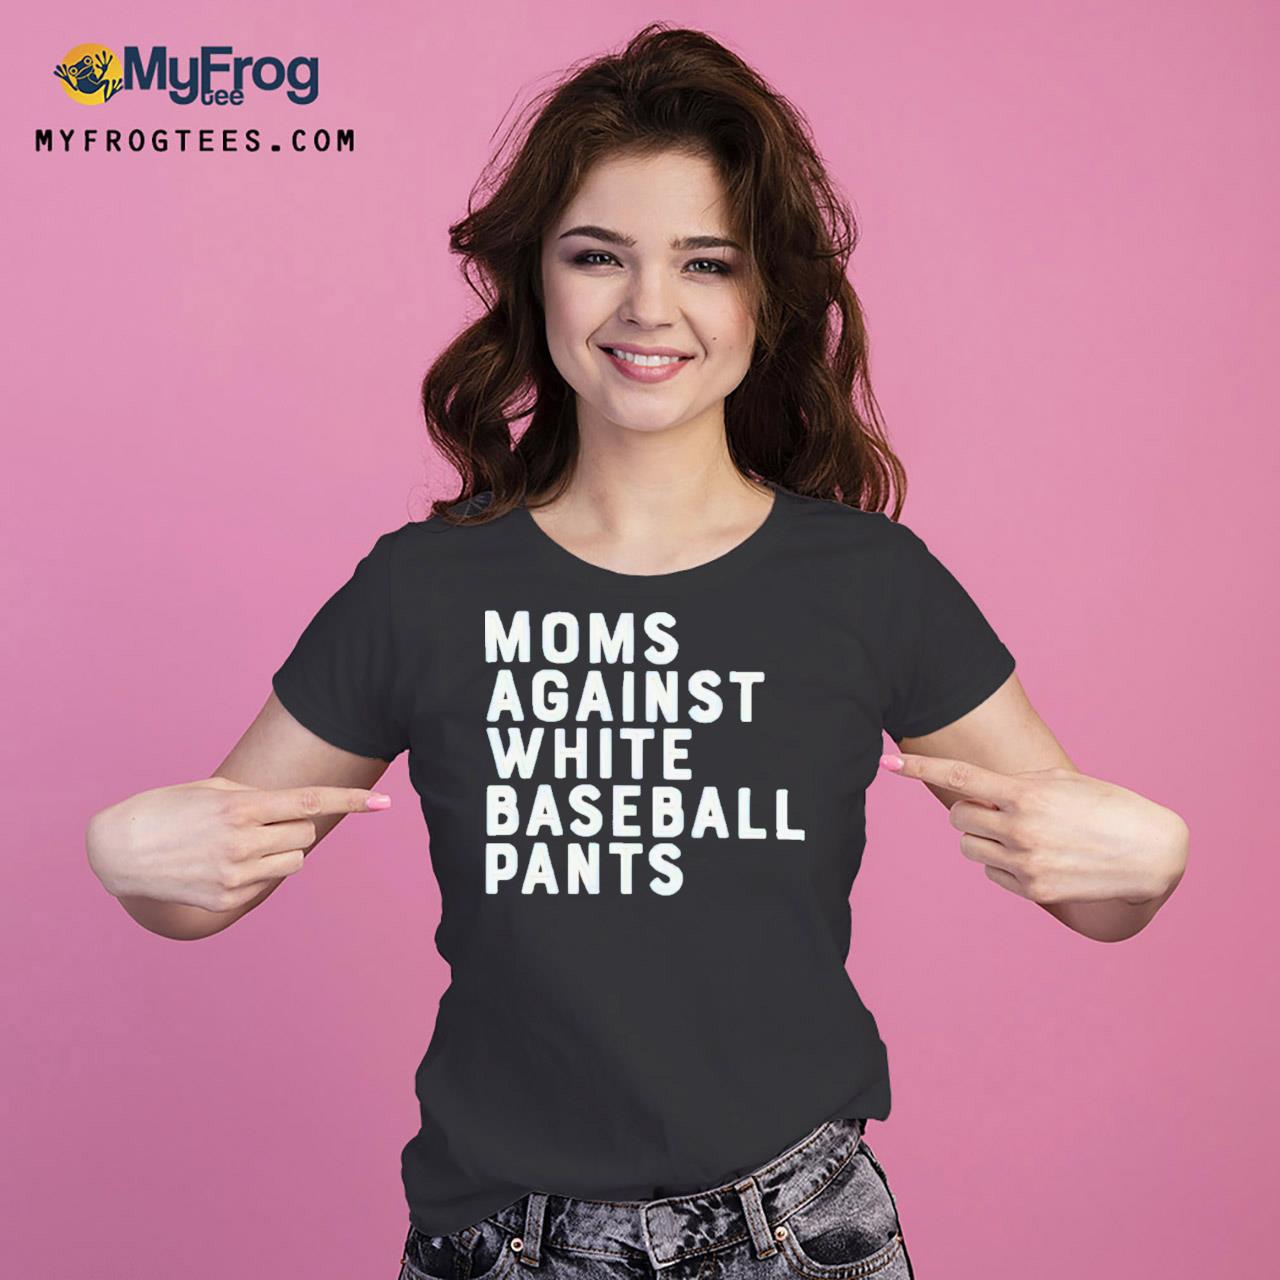 Baseball pants are too tight. No girl ever' Women's Premium T-Shirt